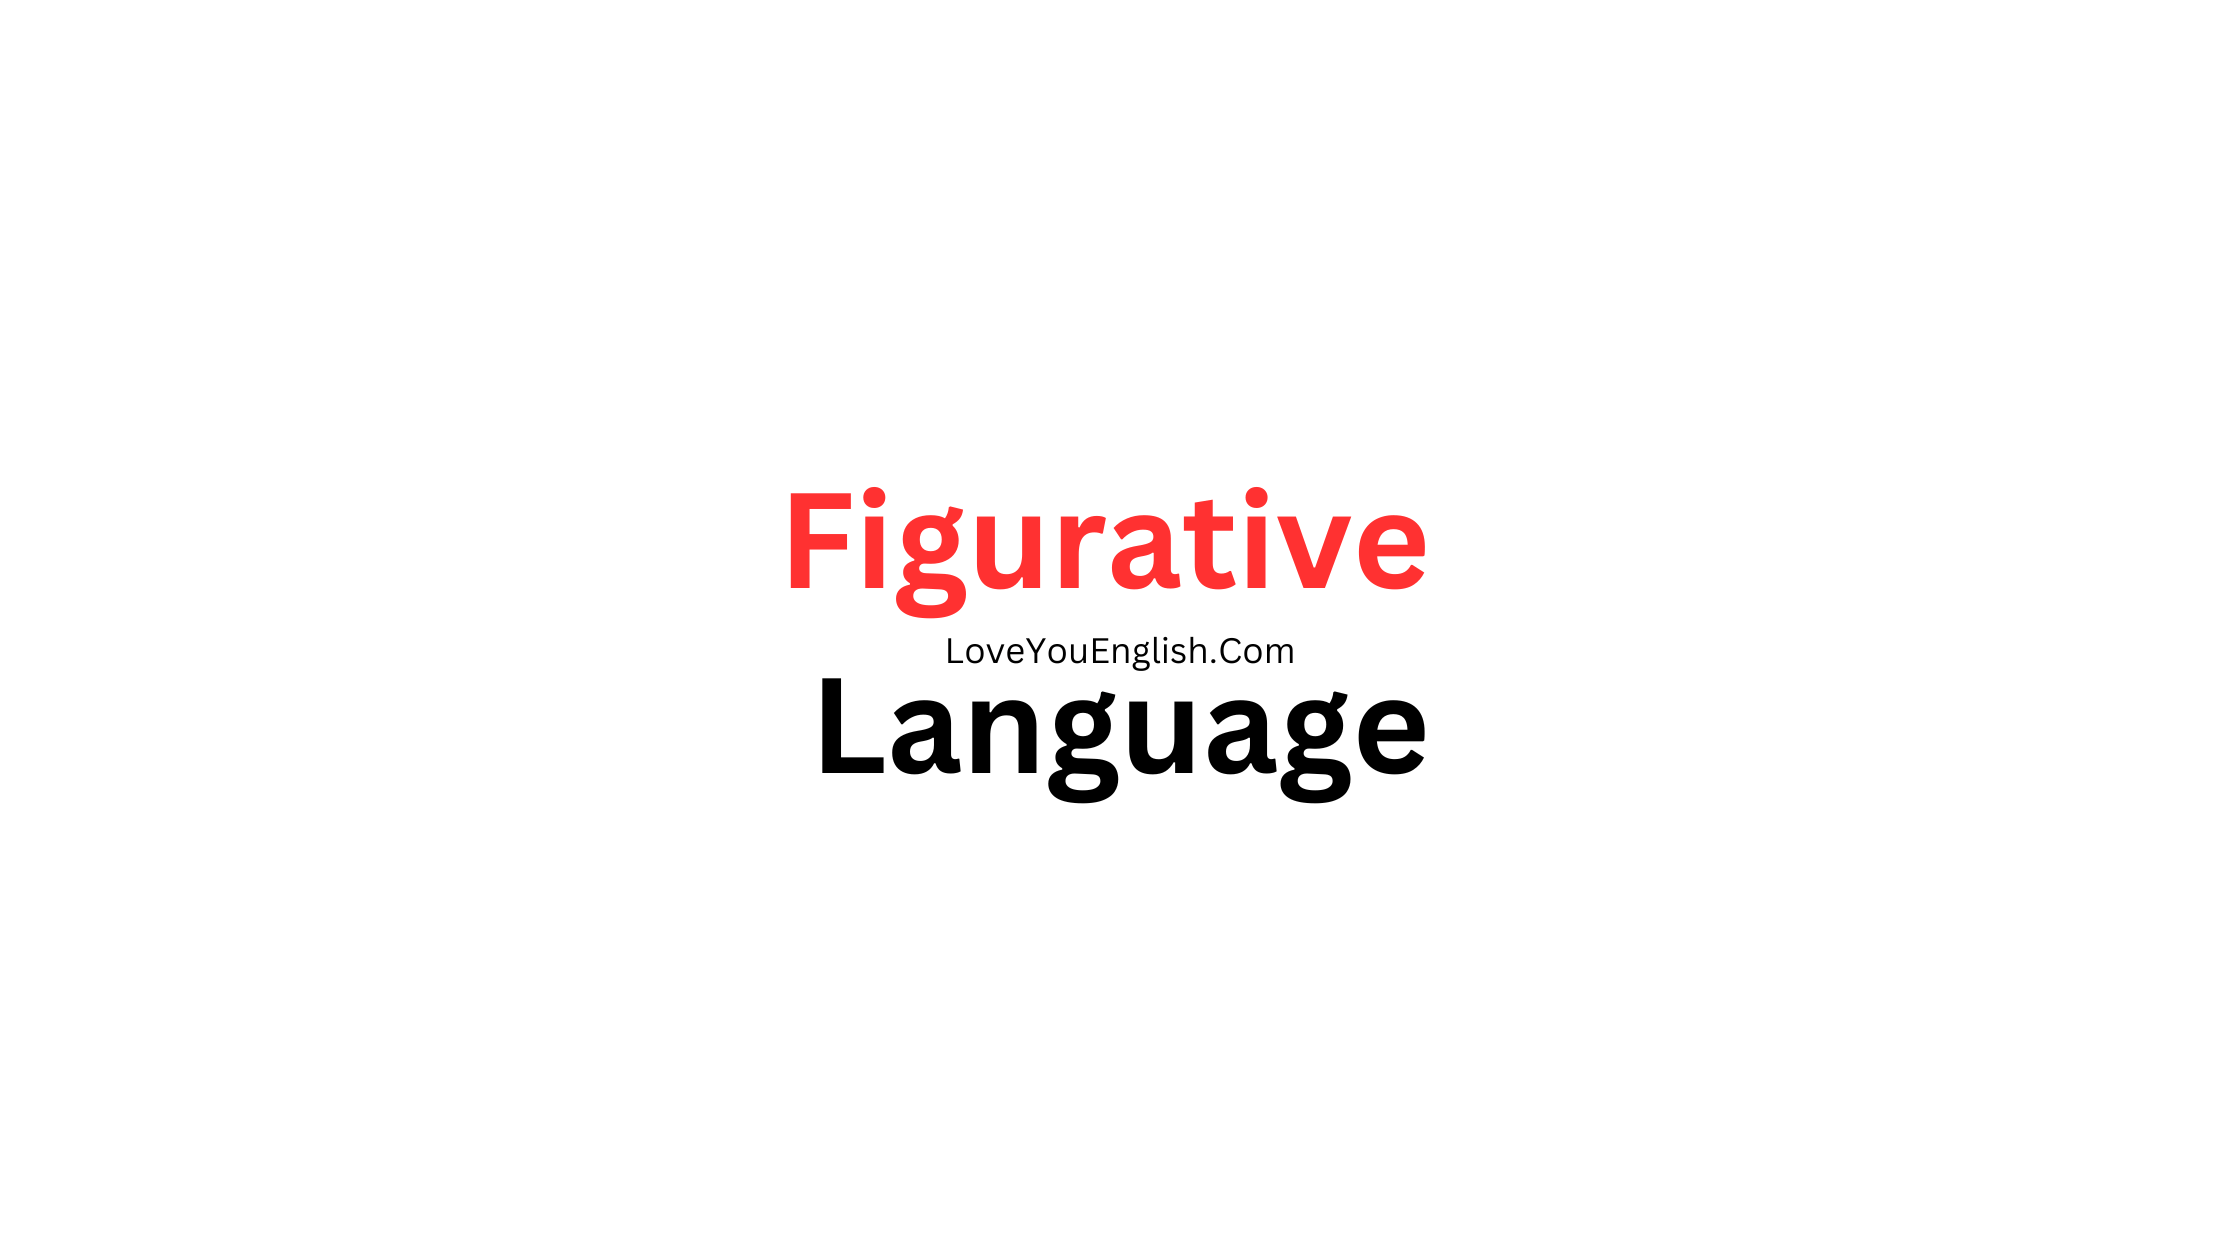 How to Use Figurative Language